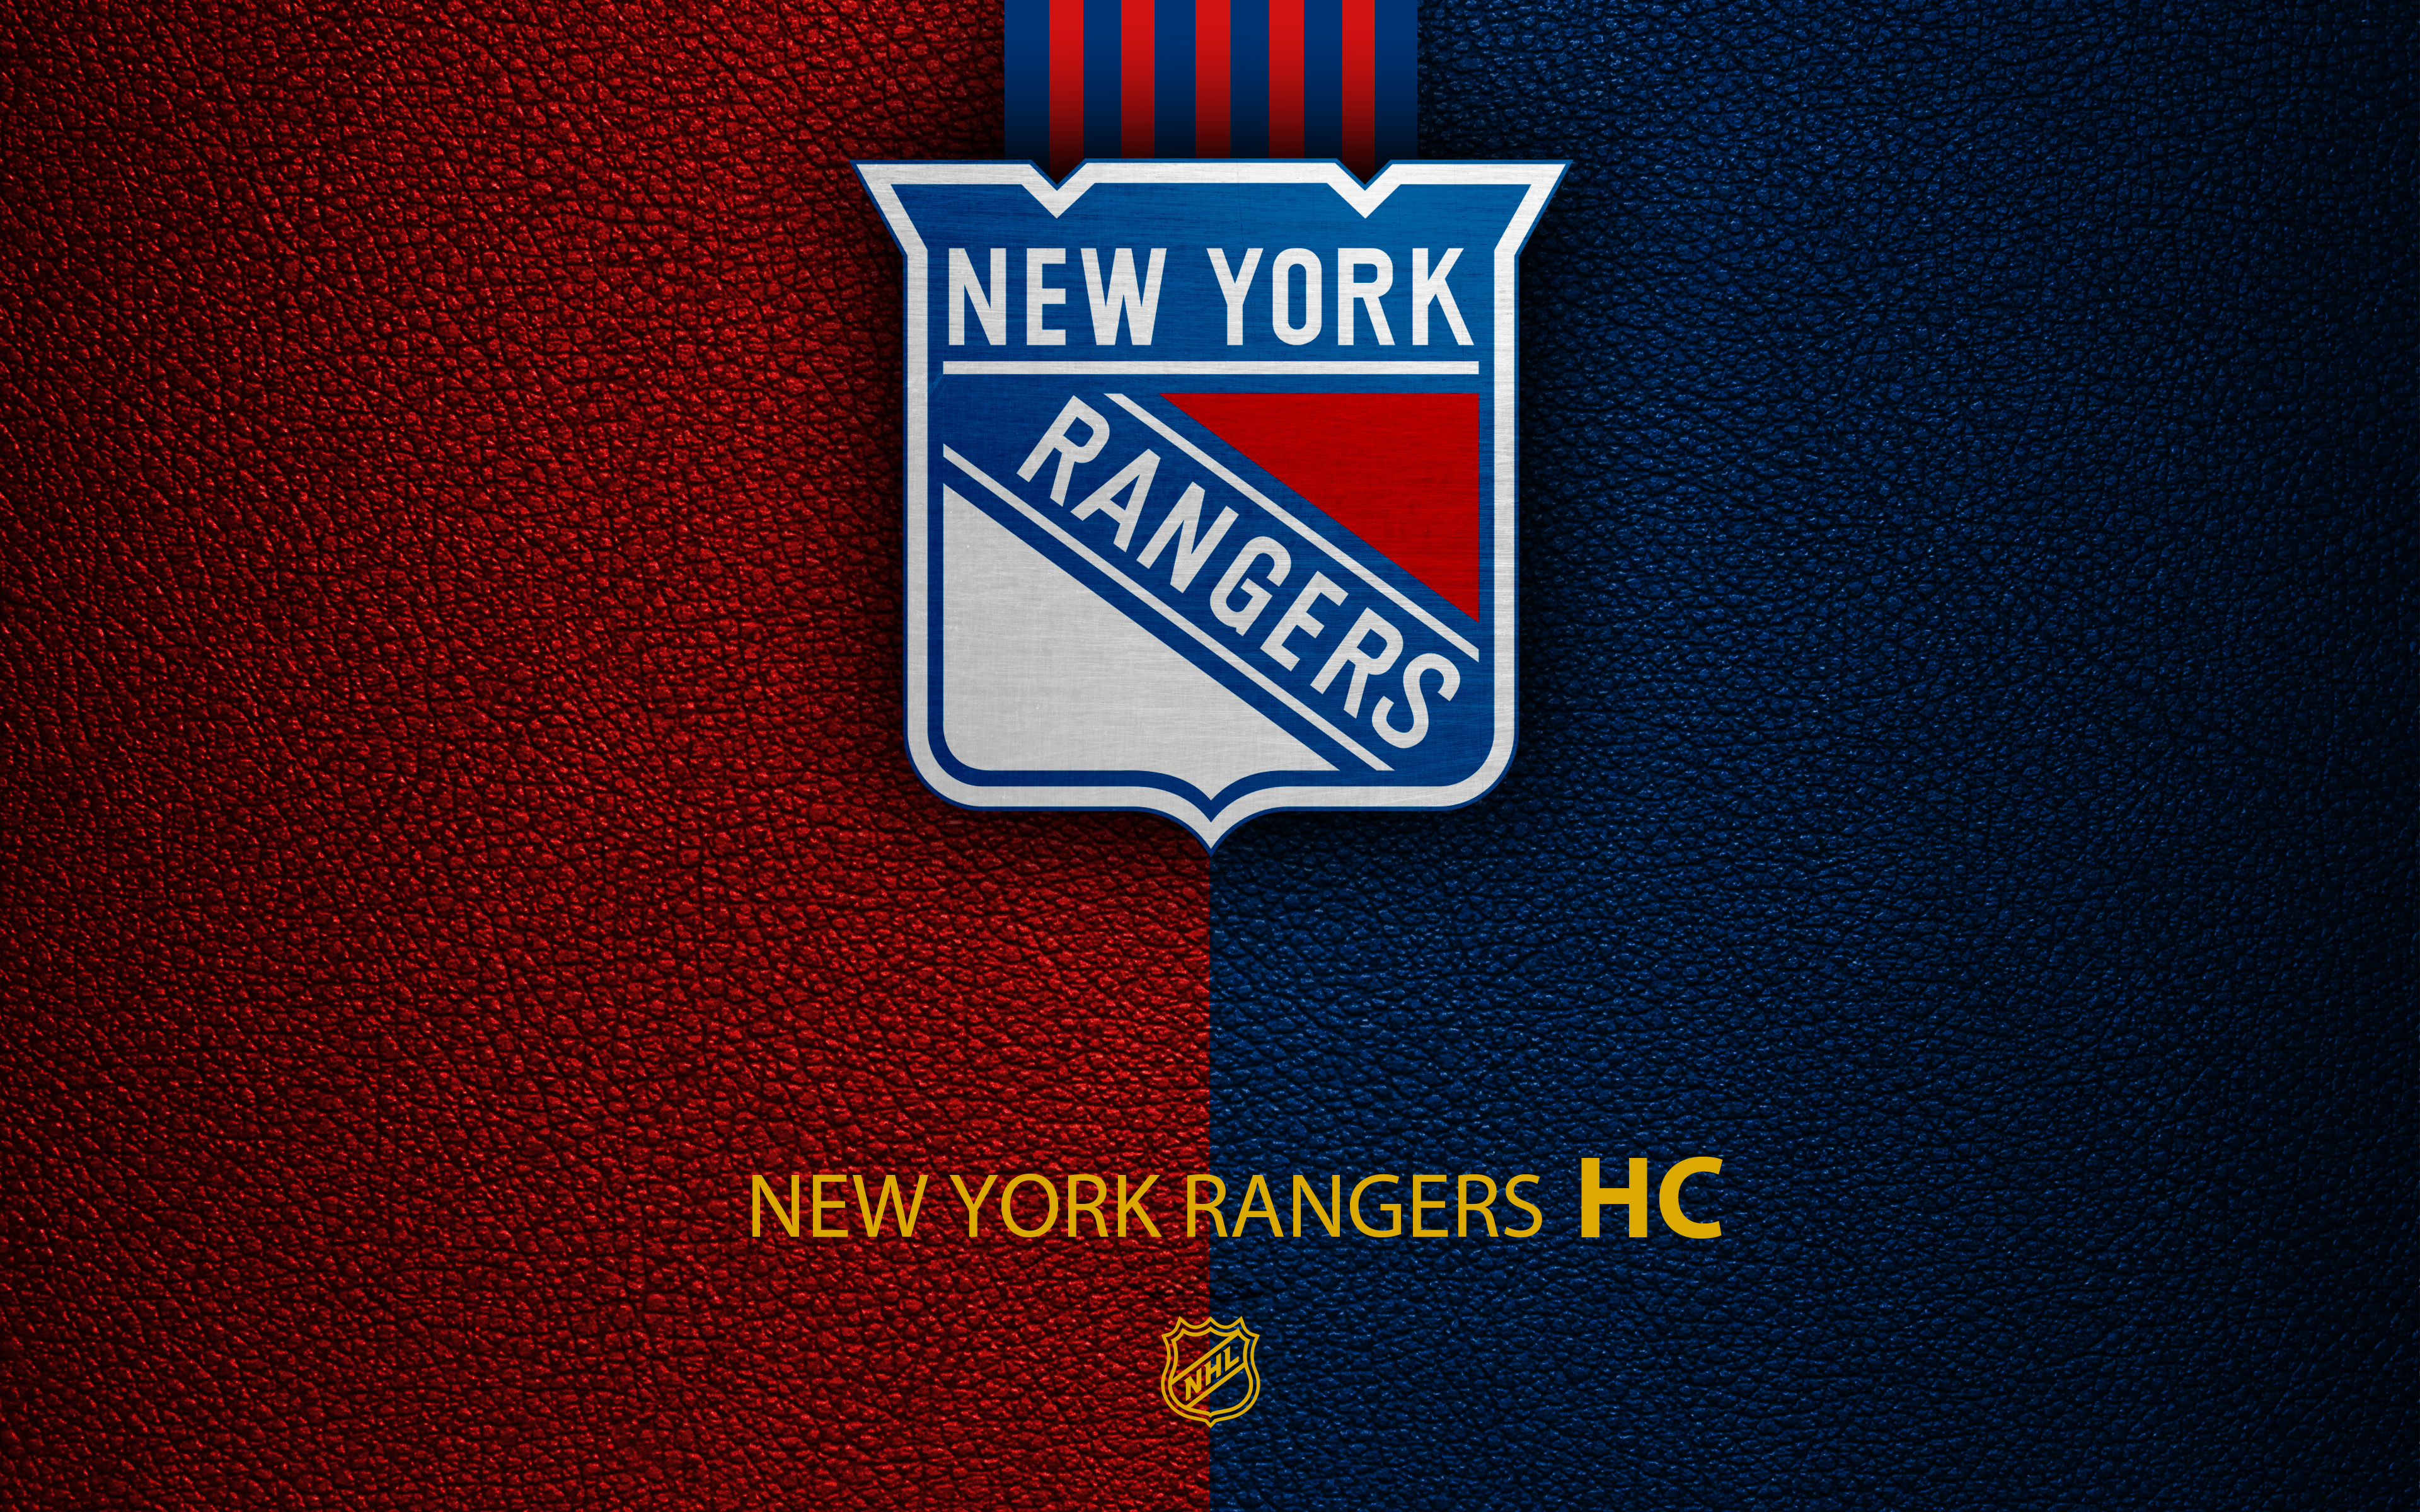 New York Rangers 4k Ultra HD Wallpaper